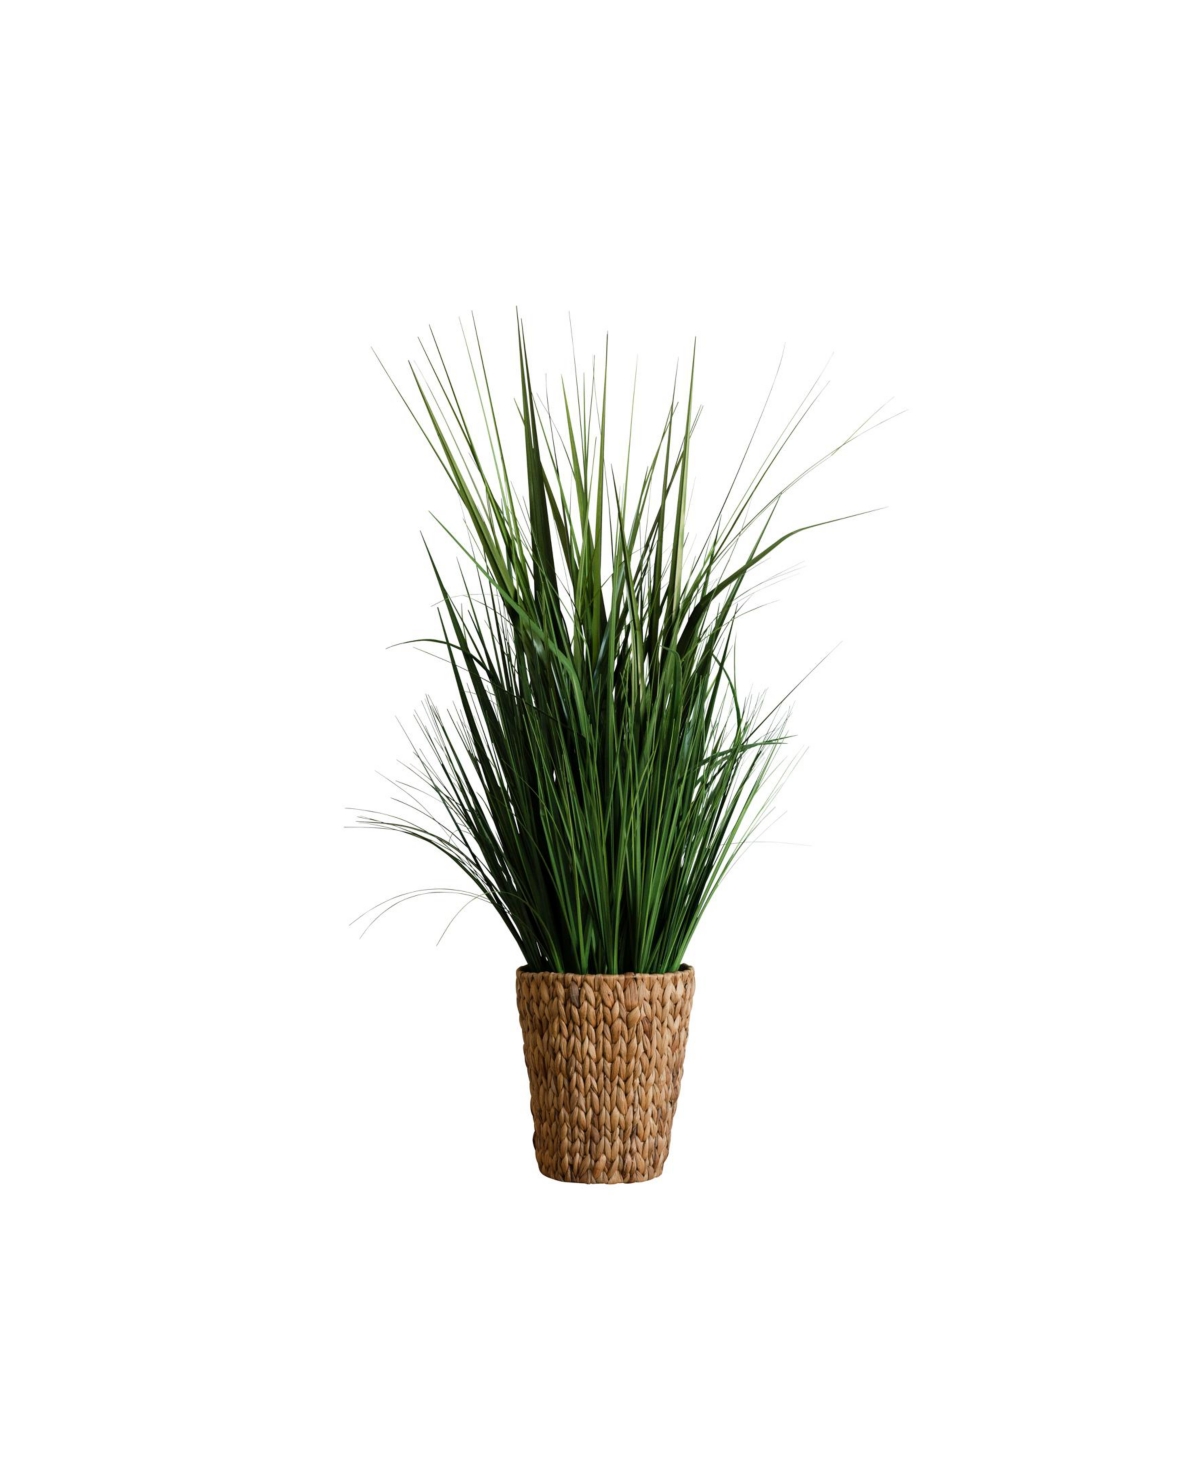 Artificial Grass in Hand-woven Basket, 48" - Brown